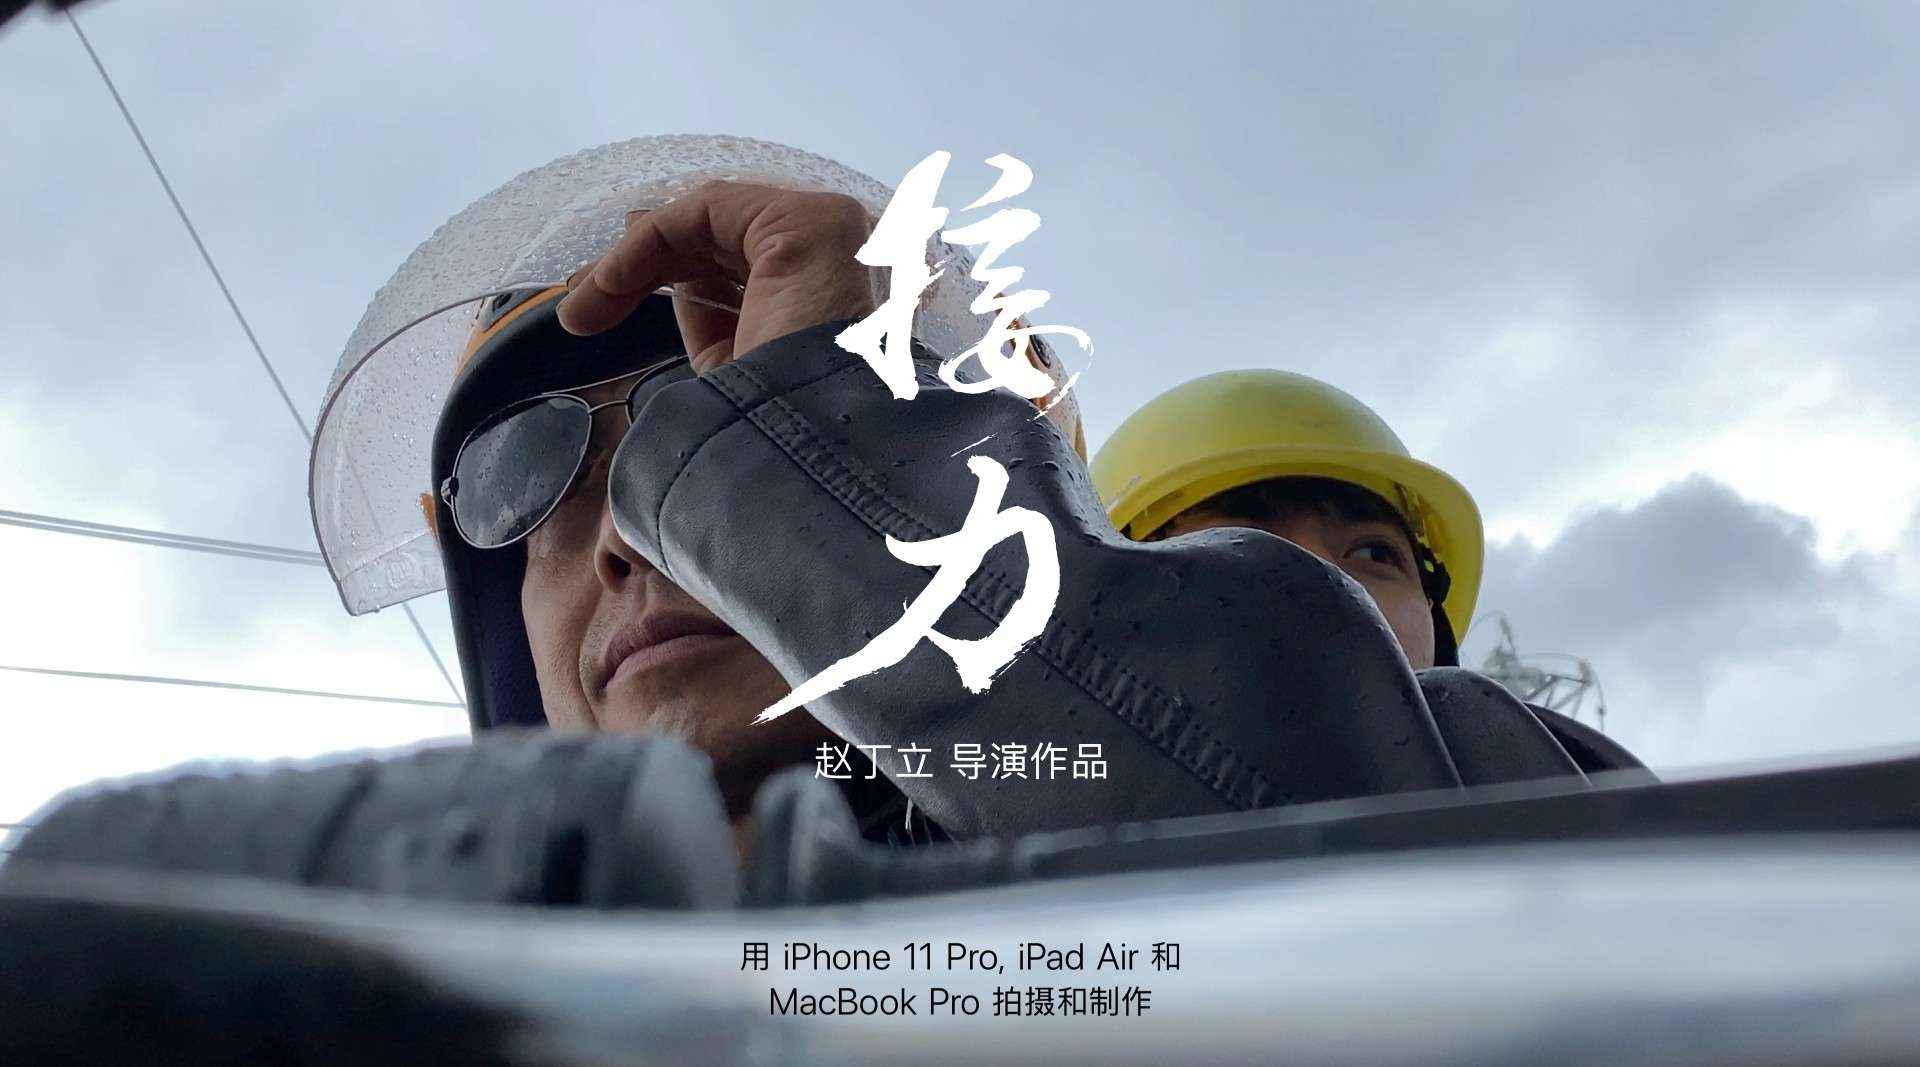 Apple短片《接力》用iPhone 11Pro拍摄